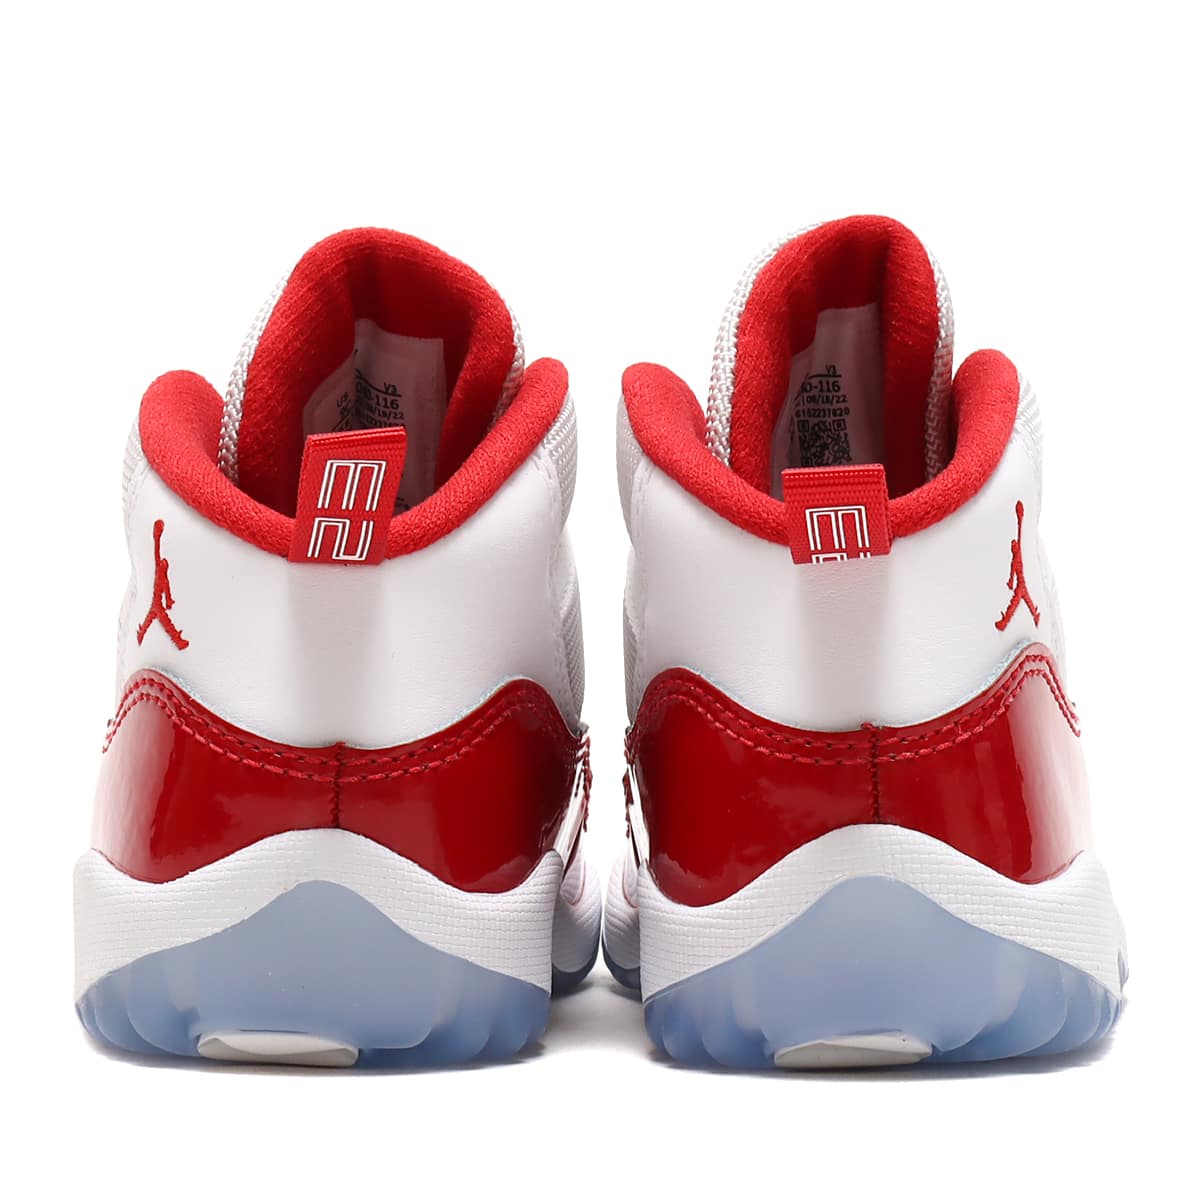 Nike Air Jordan 11 "Varsity Red"